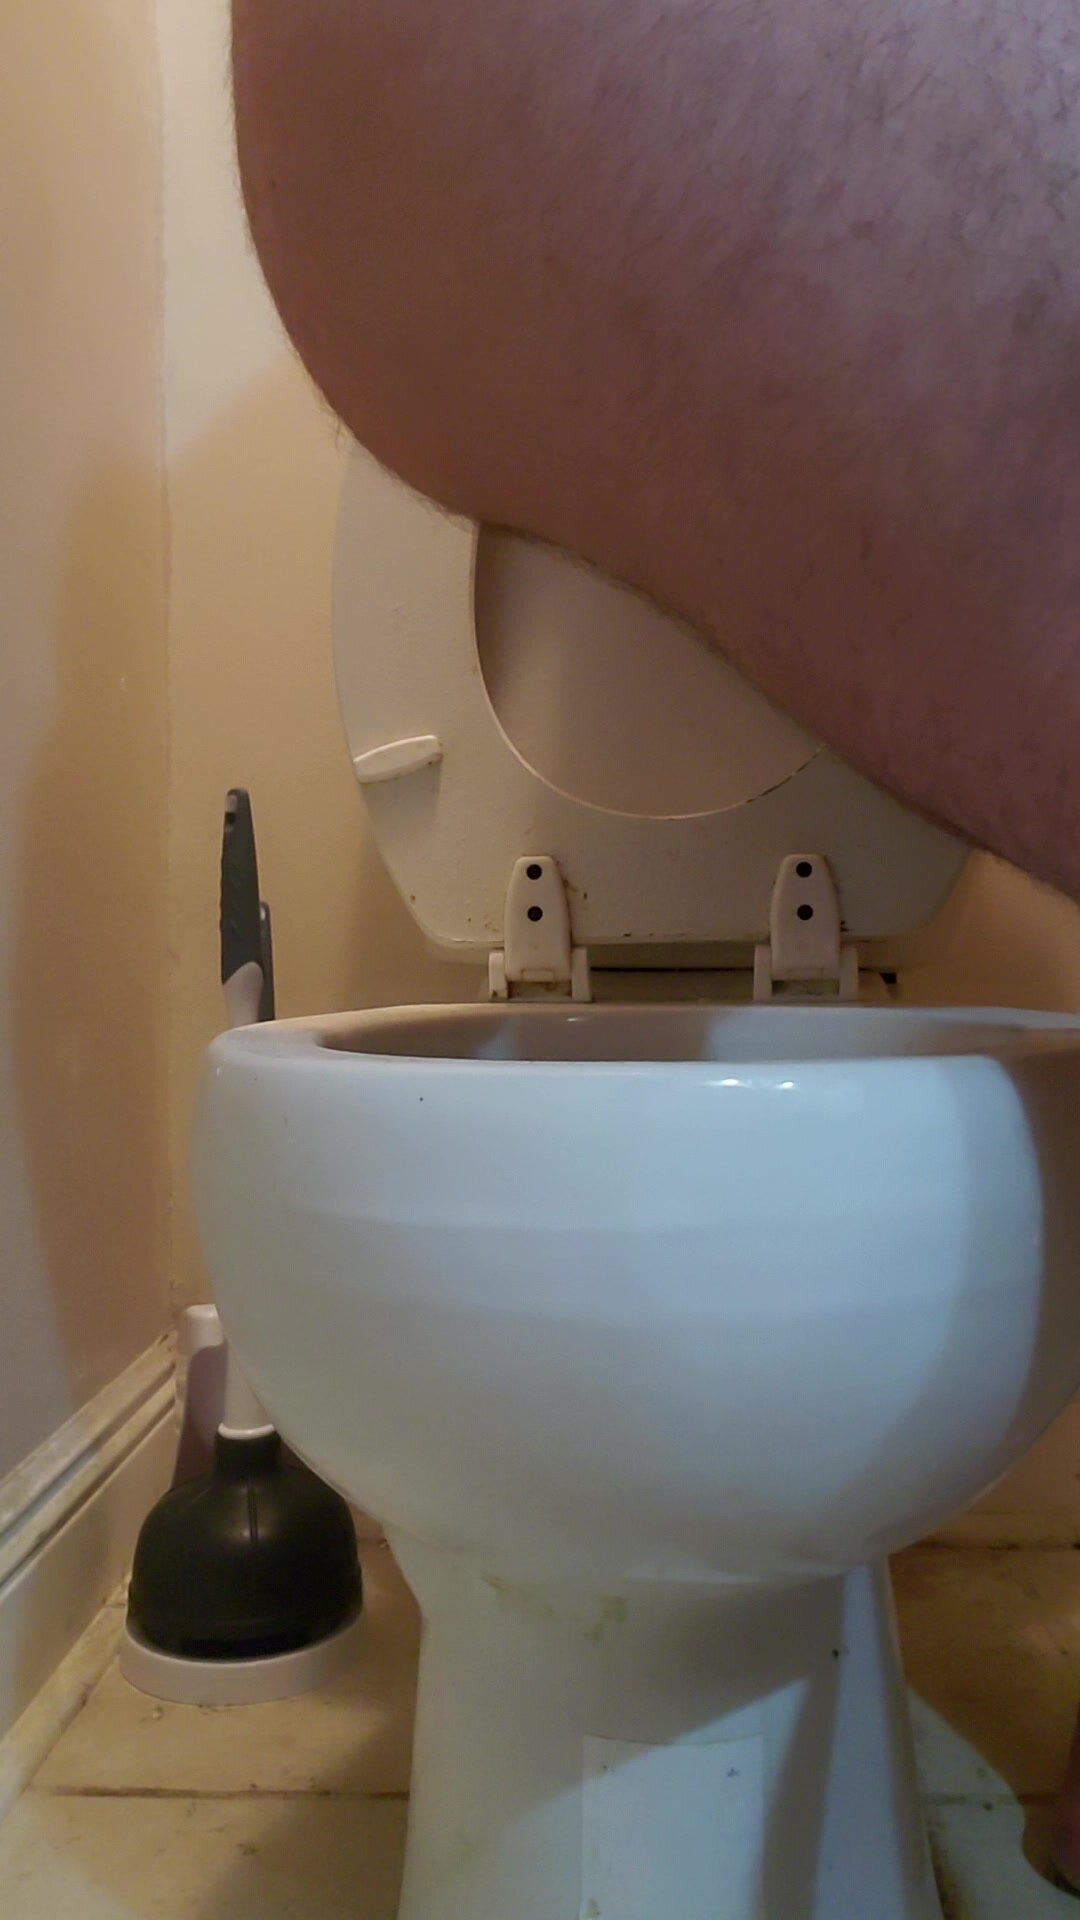 Toilet side view shit